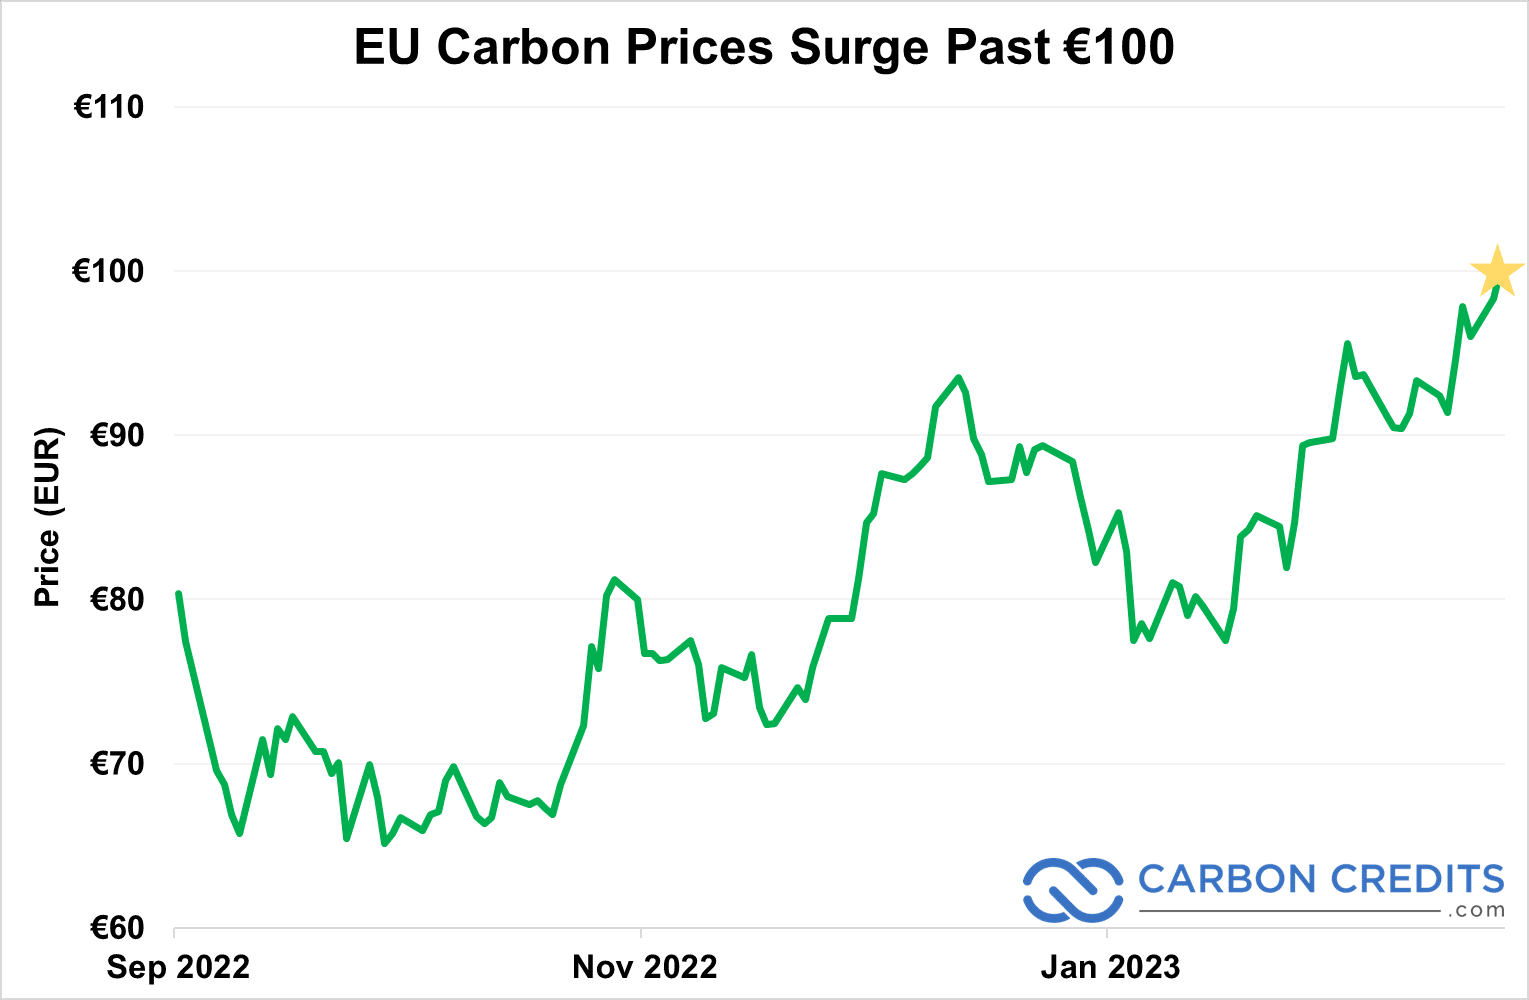 EU carbon prices for past 6 months